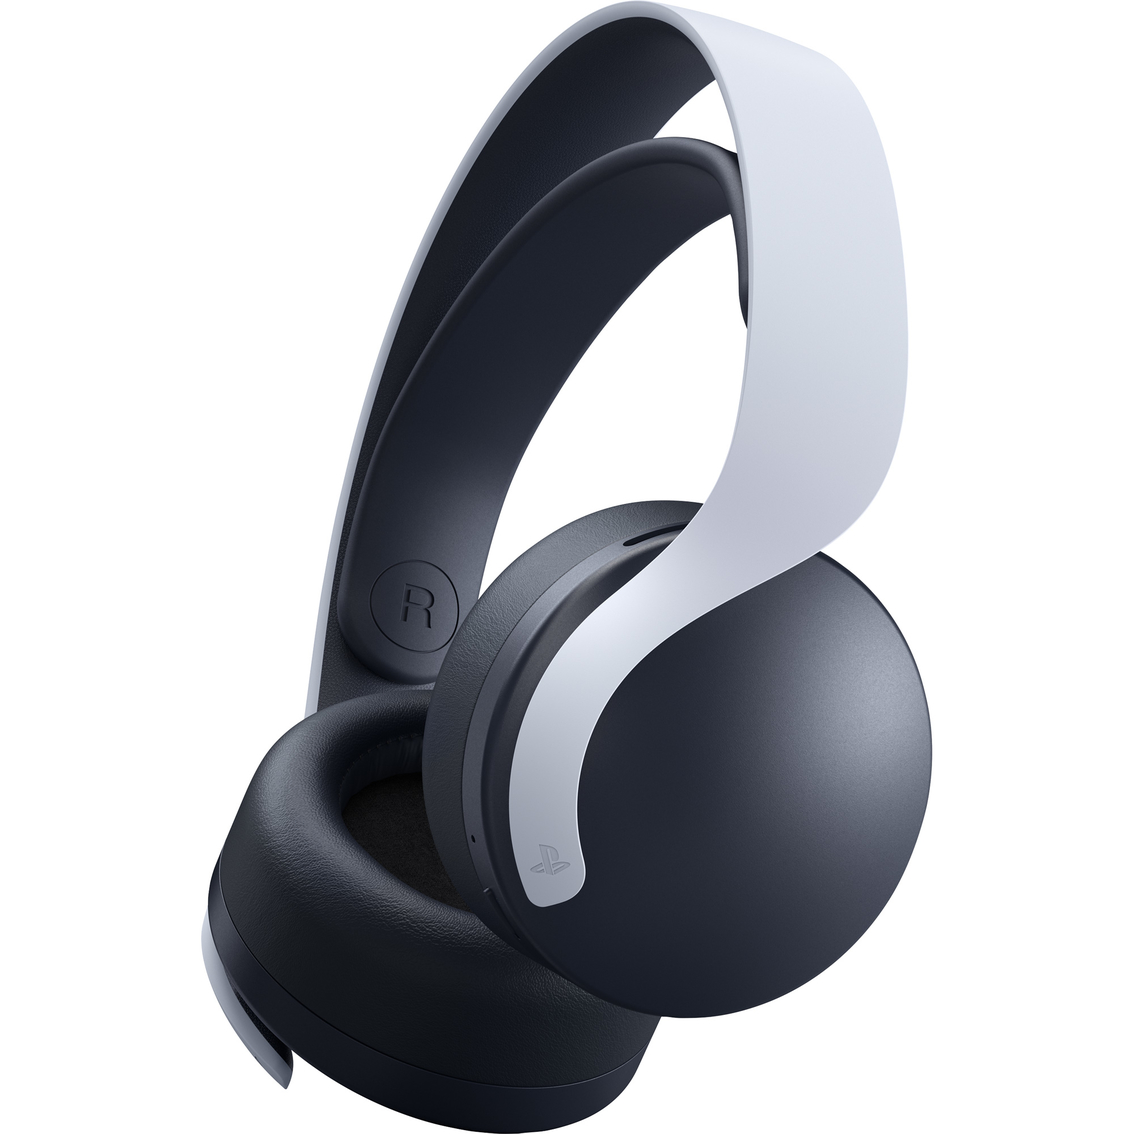 Sony PULSE 3D Wireless Headset - Image 2 of 4